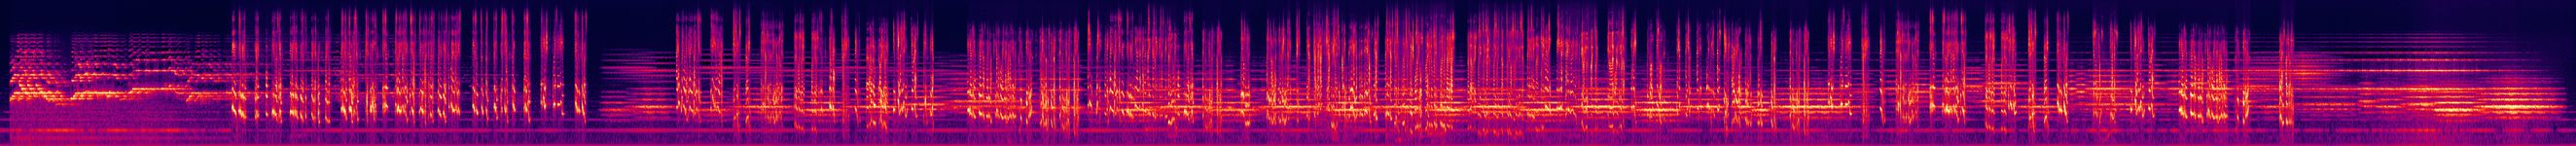 Amor Dei - 2. Rorate Coeli - Spectrogram.jpg